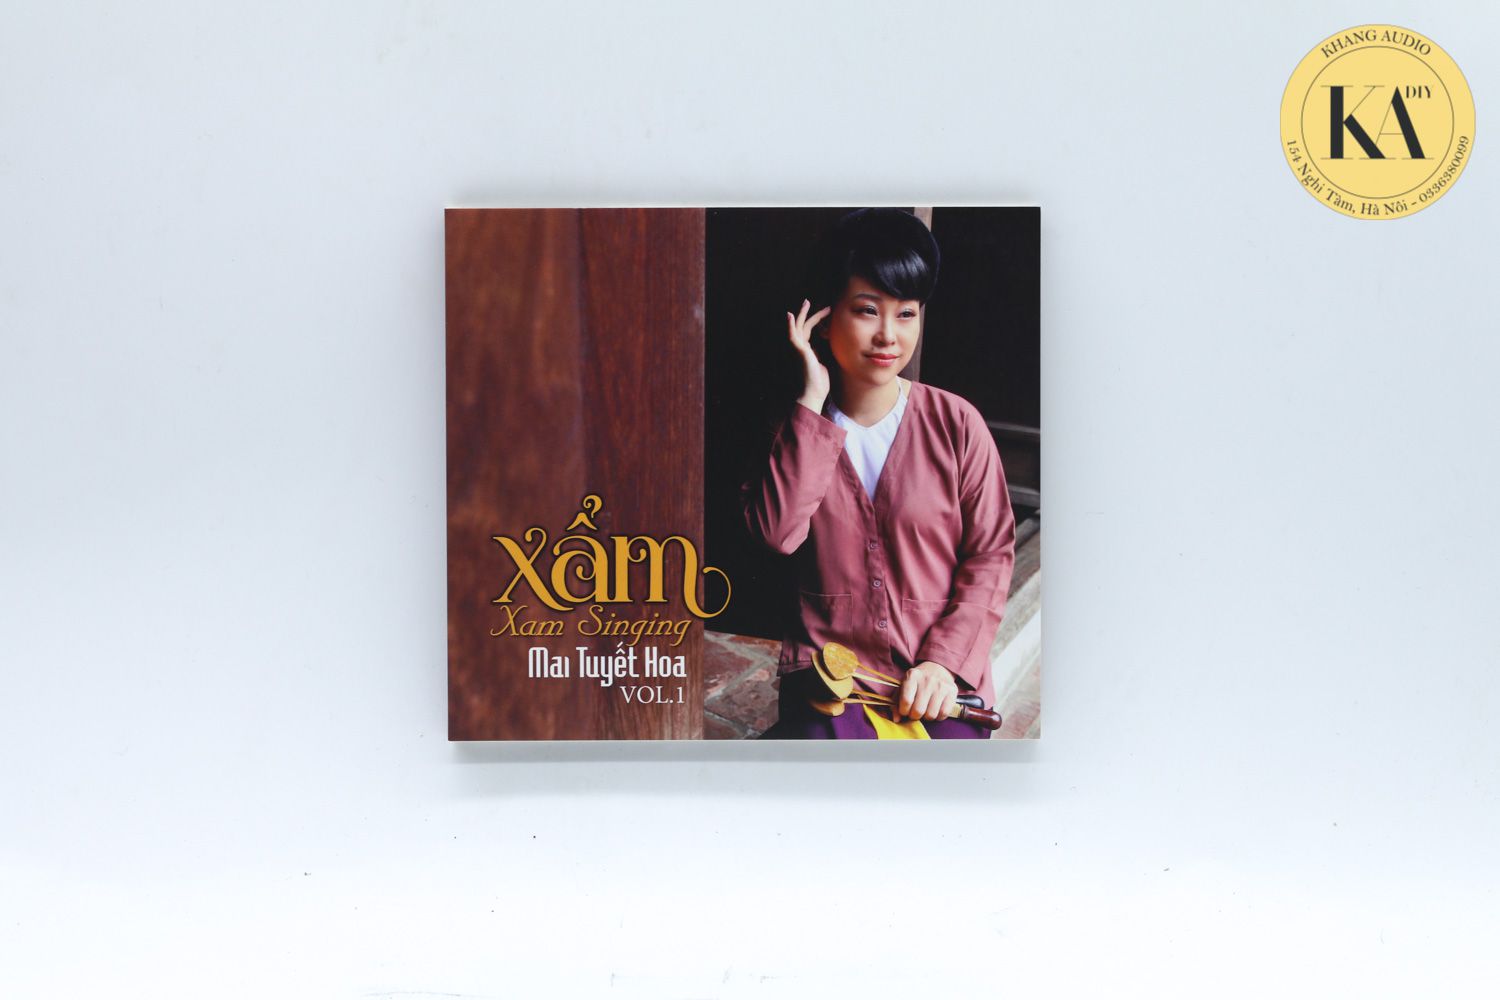 Xẩm Vol.1 - Mai Tuyết Hoa Khang Audio 0336380099